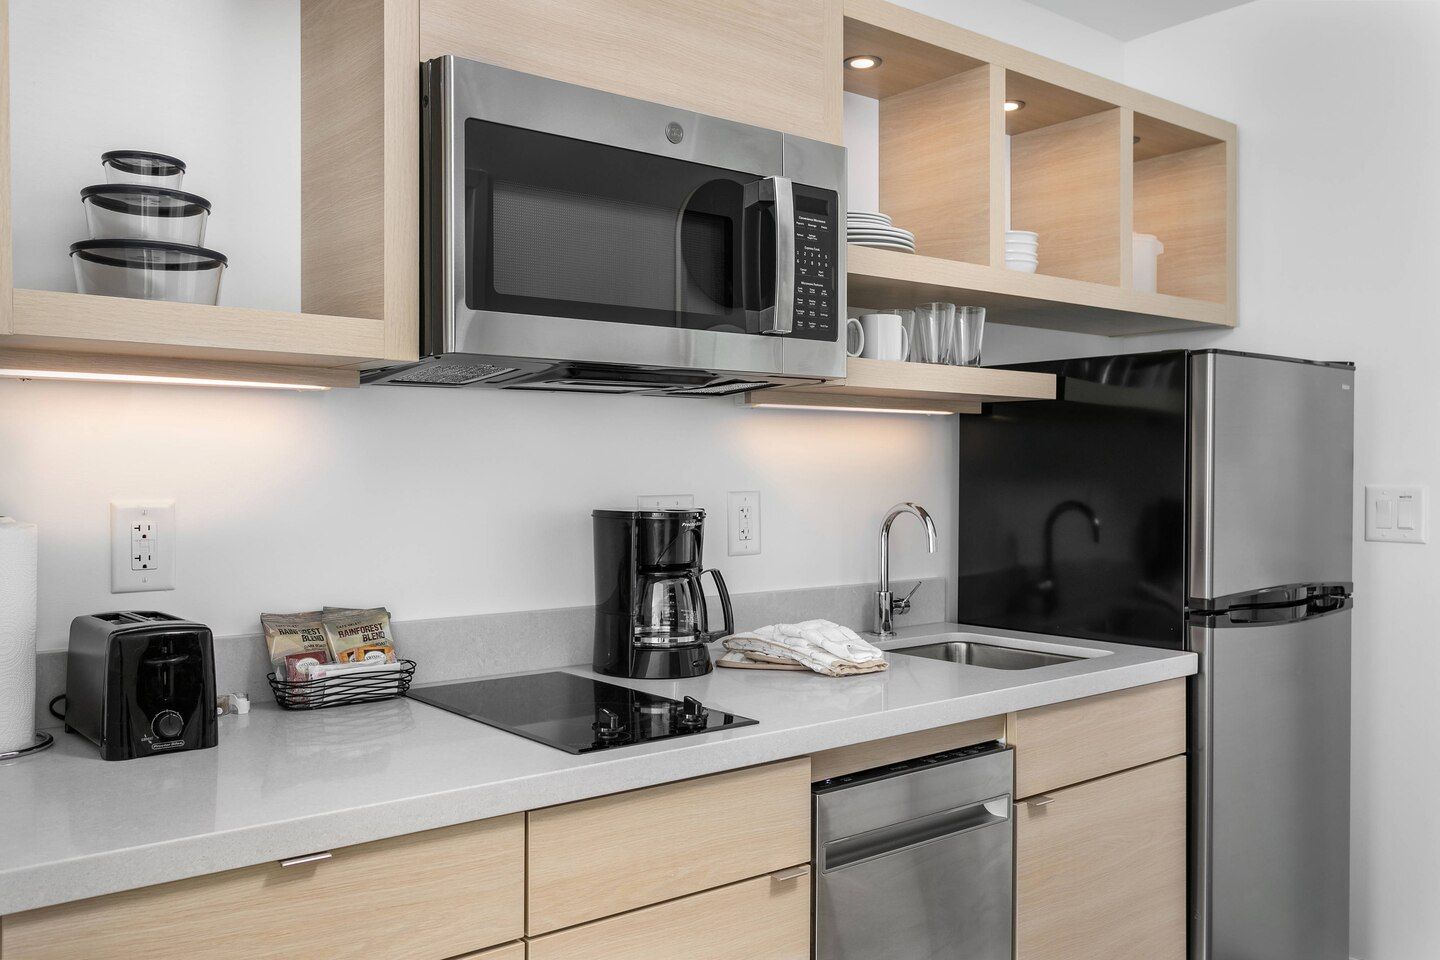 TownePlace Suites Guestroom Kitchen Cabinets & Quartz Countertops